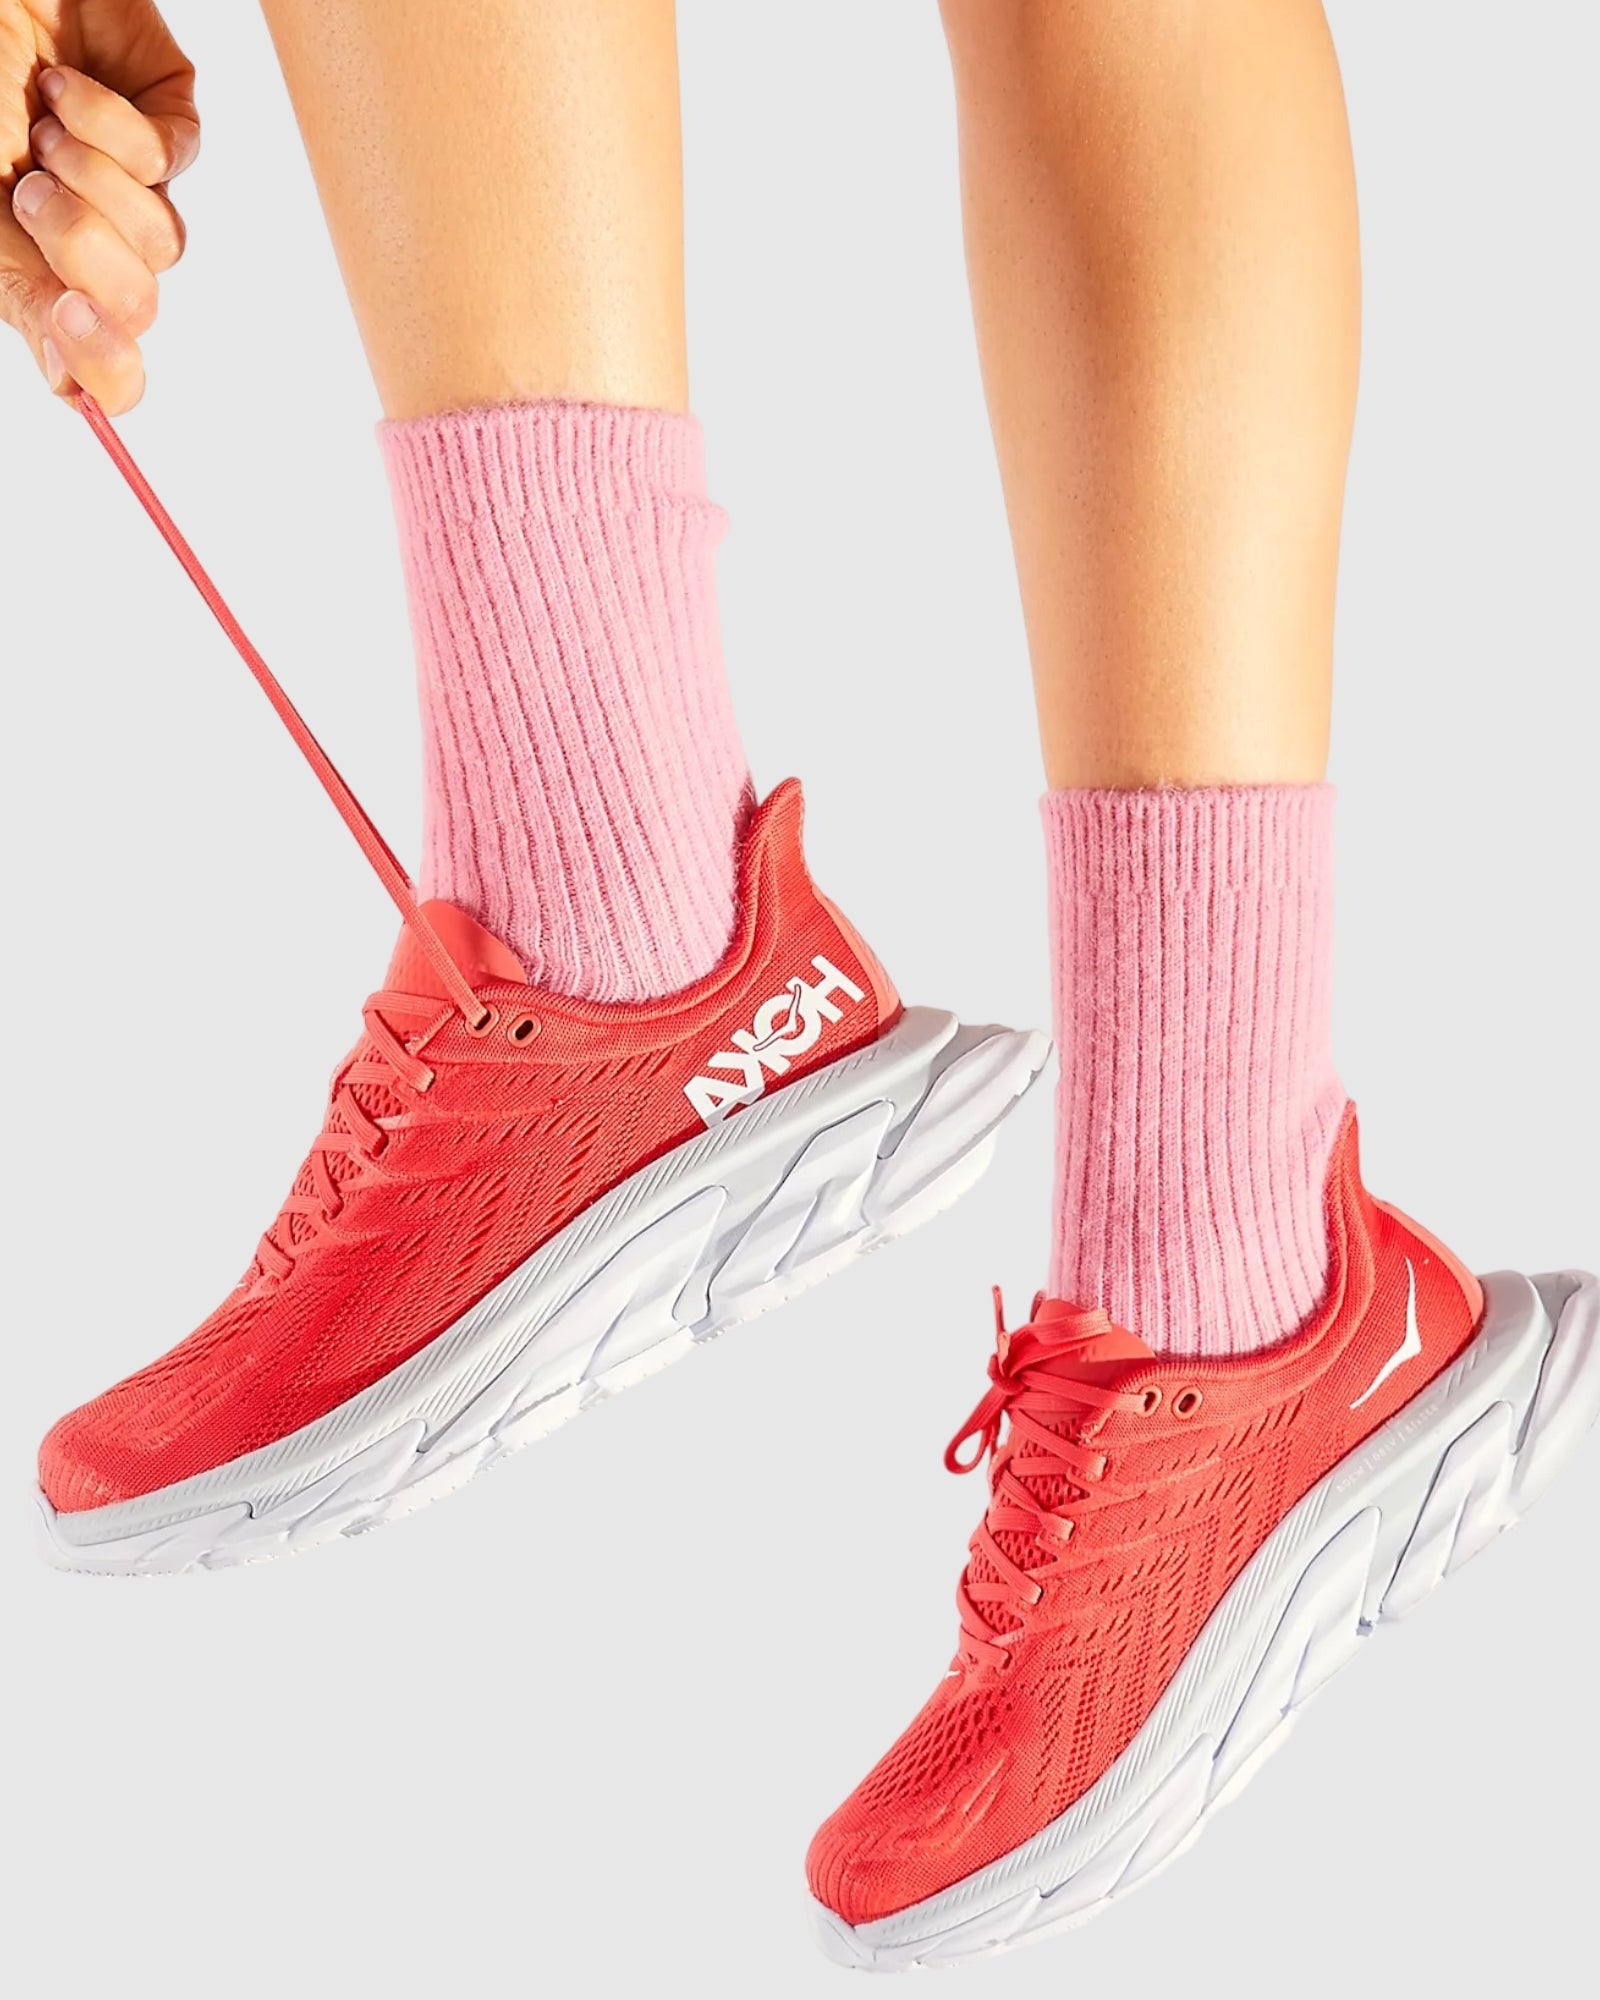 Cashmere Sock - Medium Pink